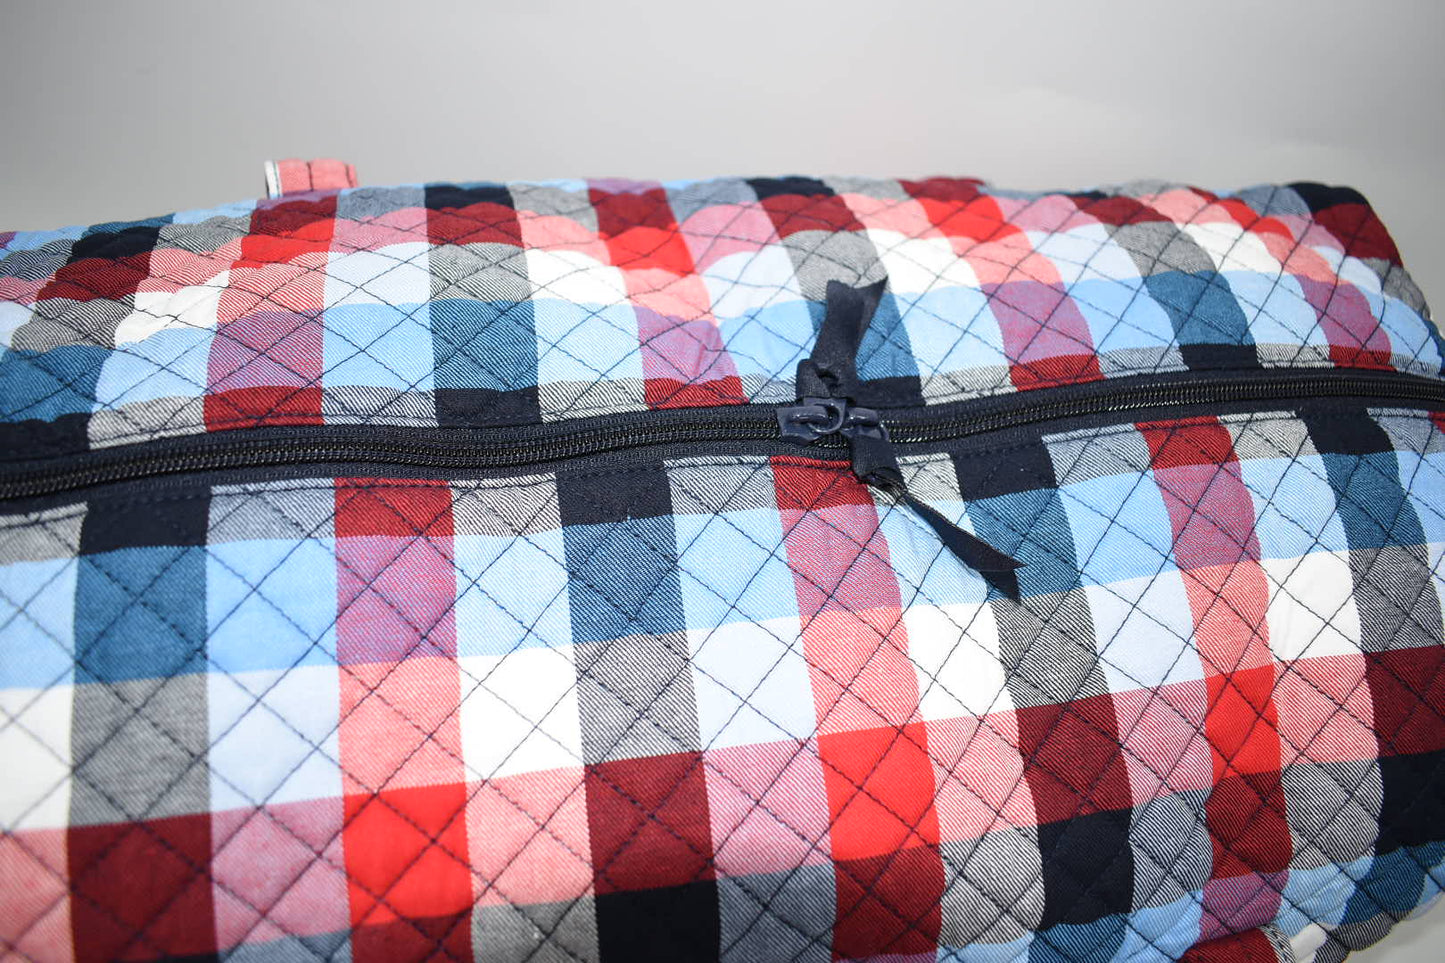 Vera Bradley Large Travel Duffel Bag in "Patriotic Plaid" Pattern